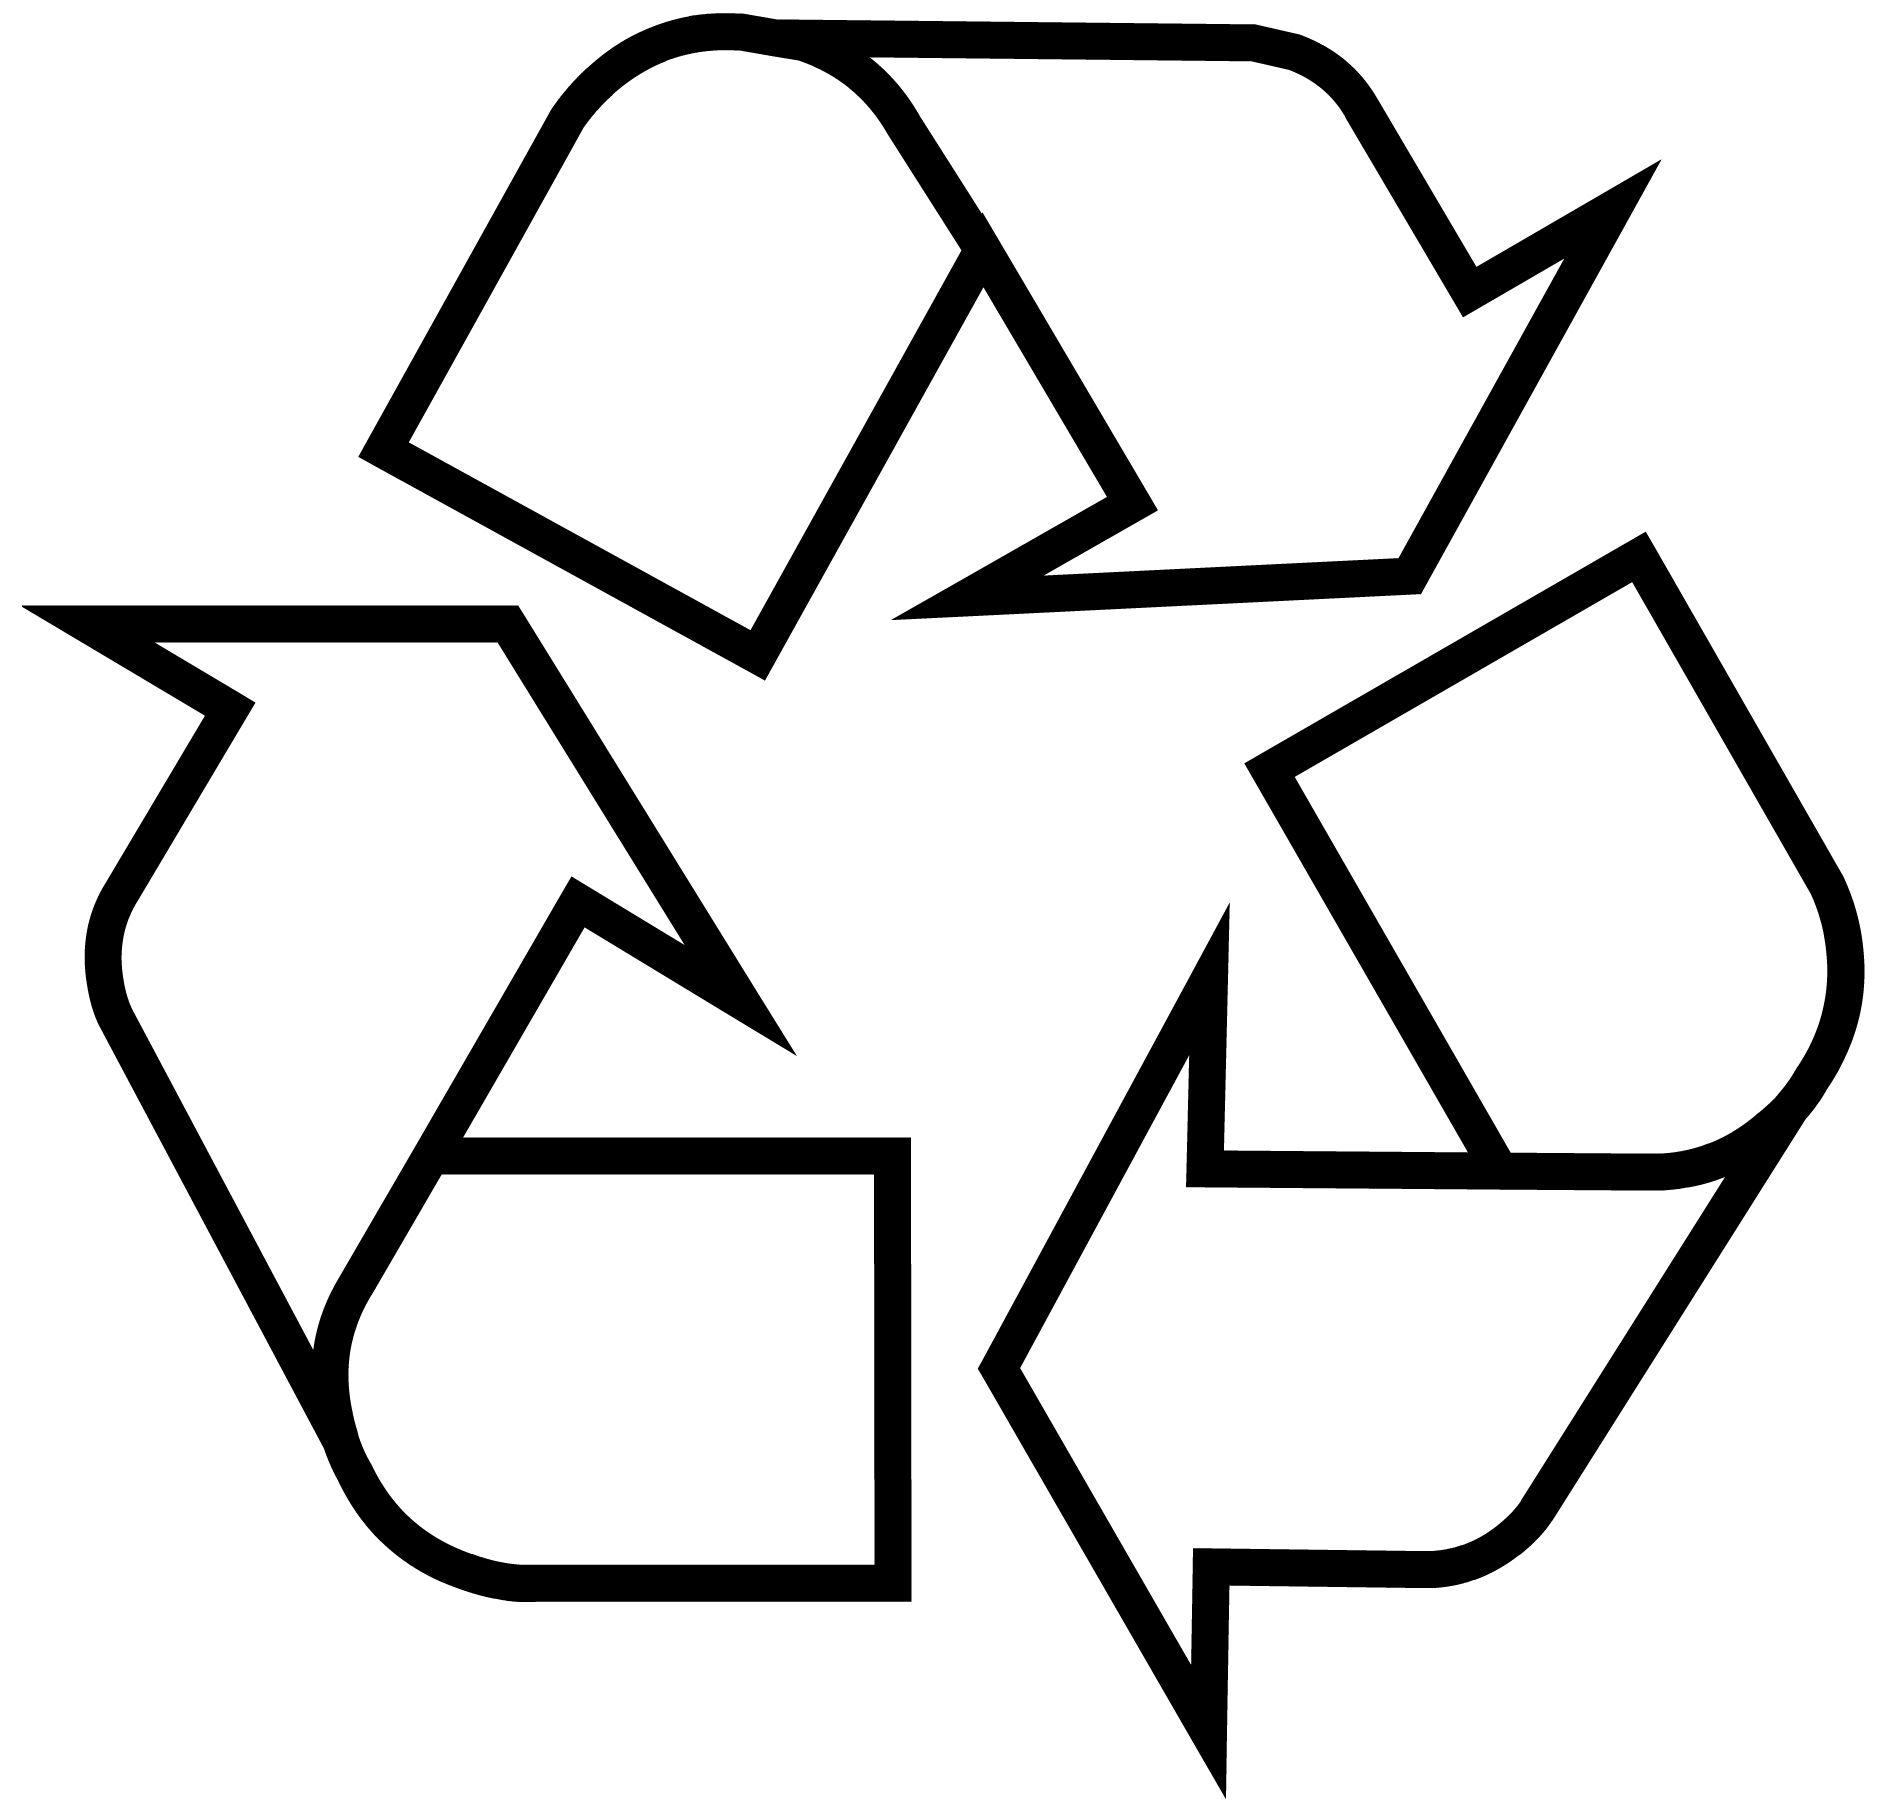 U Symbol Logo - Recycling Symbol - Download the Original Recycle Logo